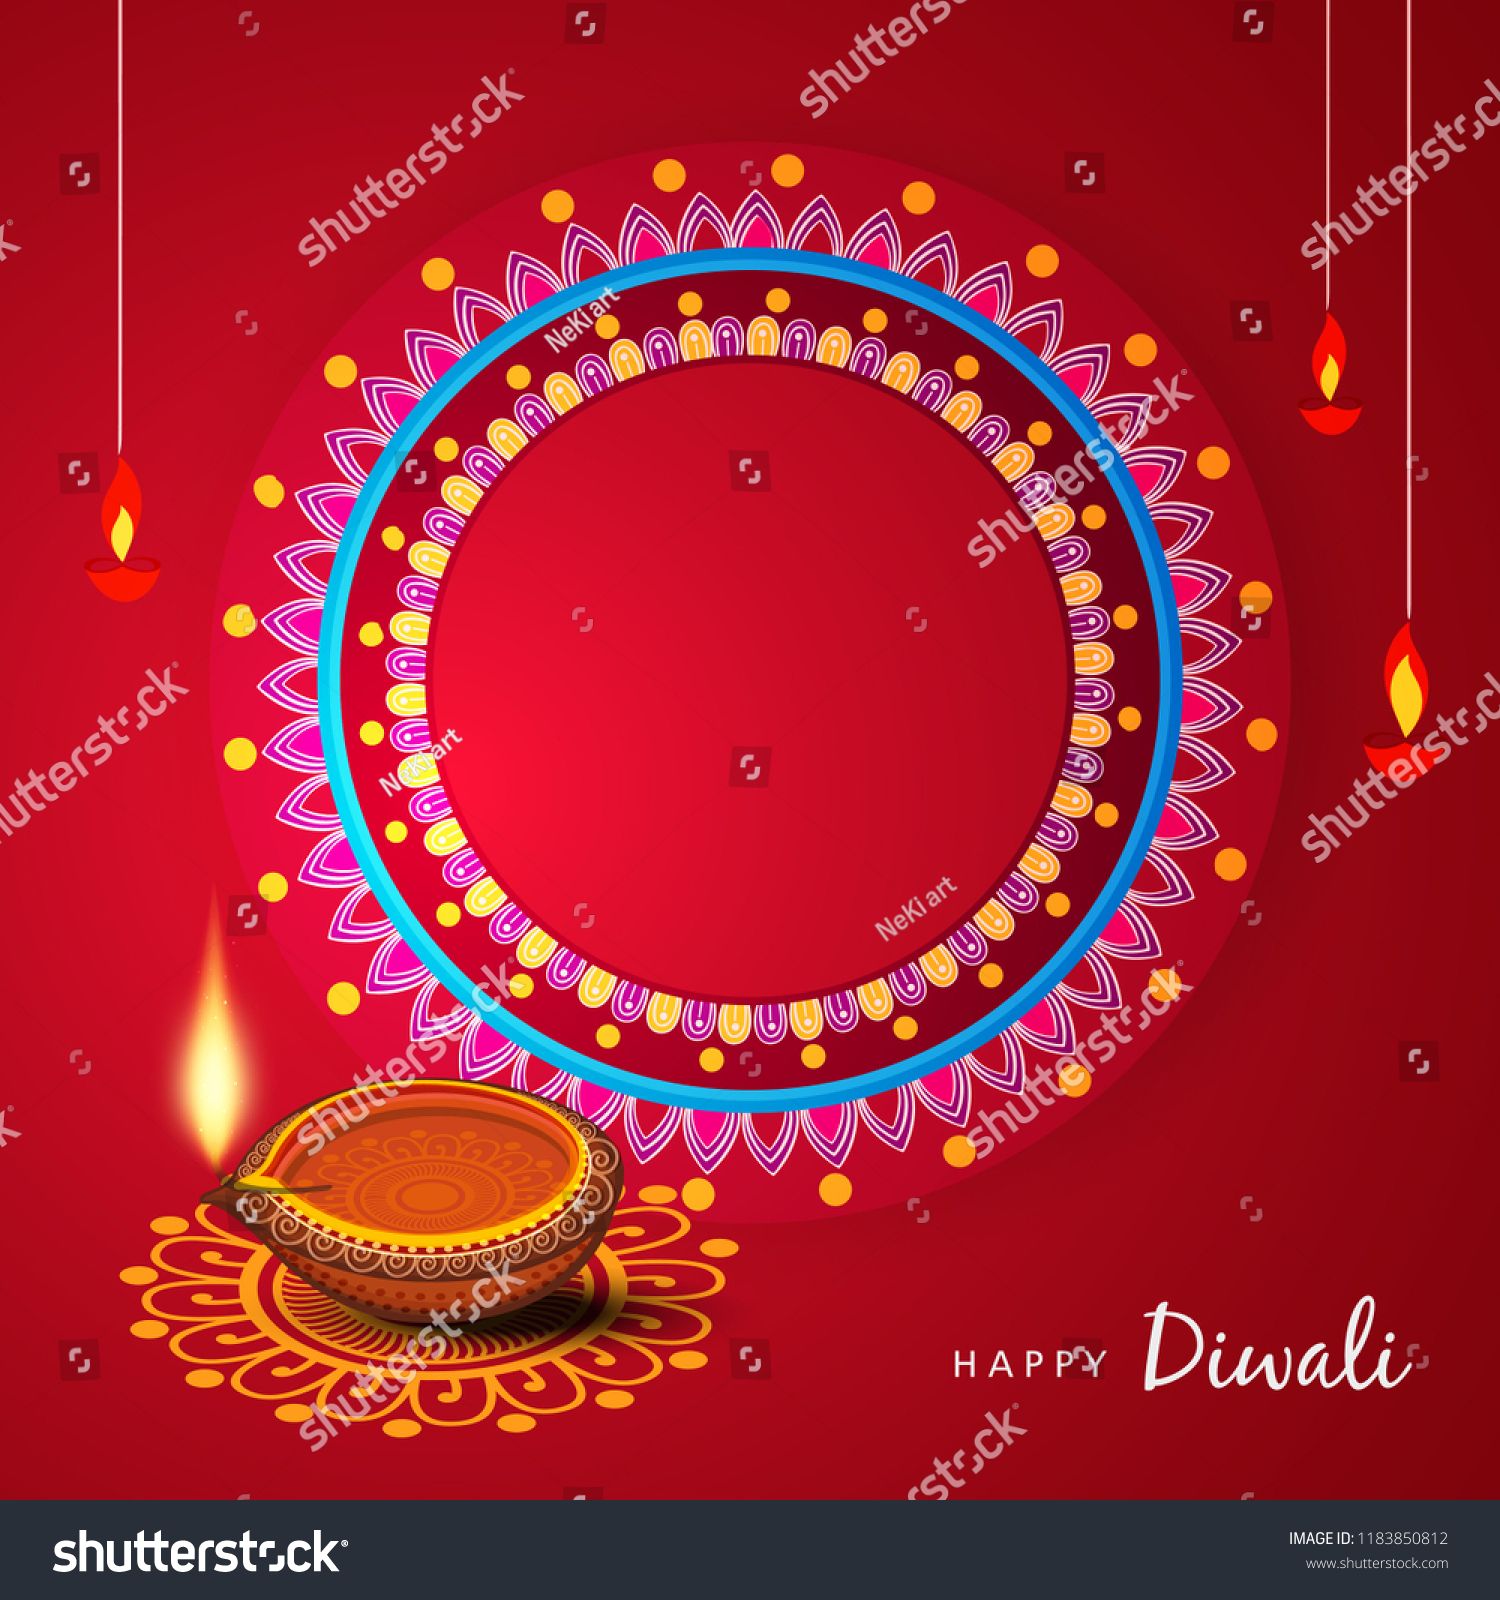 Creative Greeting Card Design For Happy Deepavali Festival